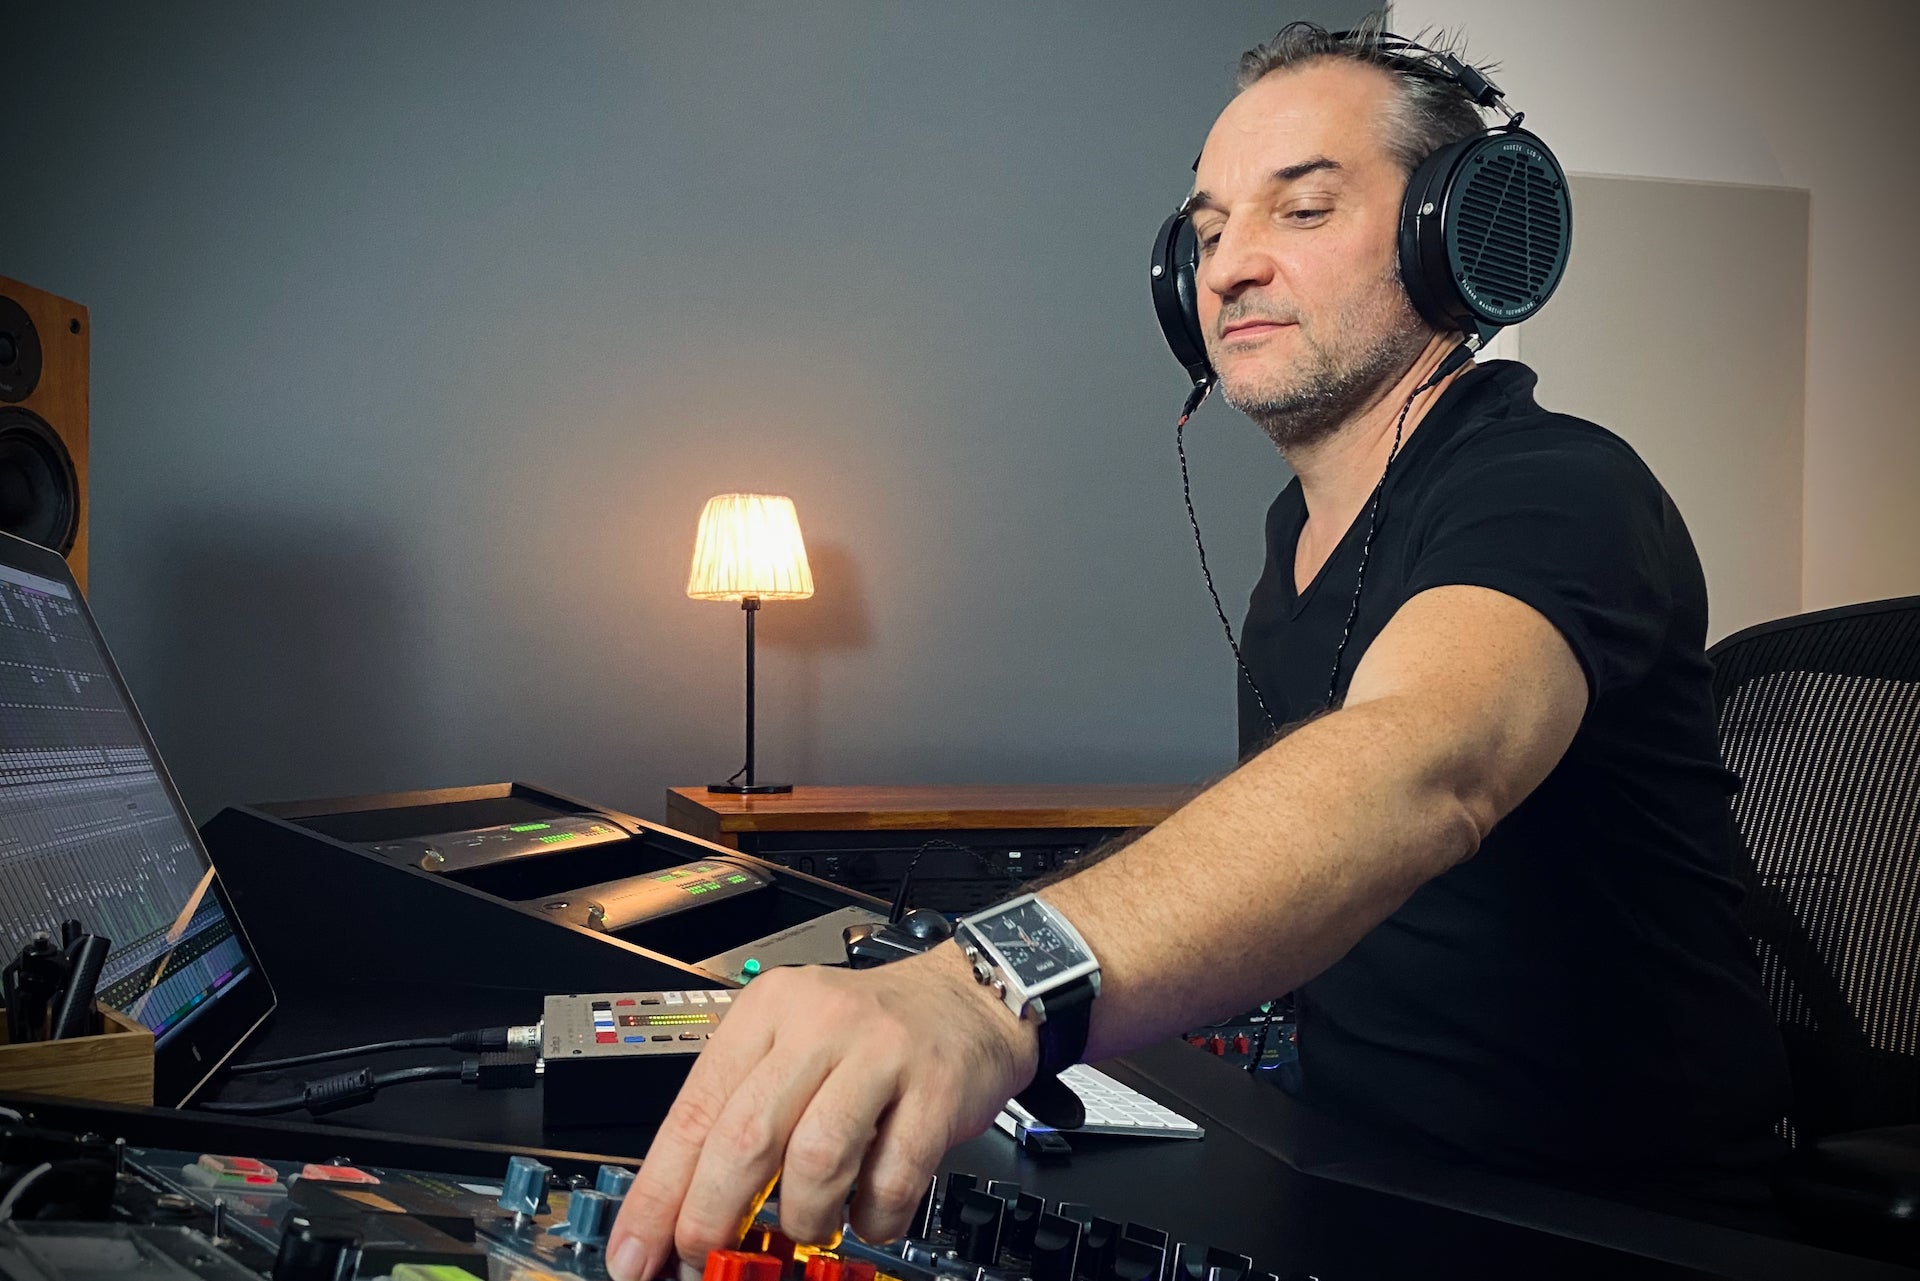 Stéphane Piquemal in the studio with his Audeze LCD-X headphones